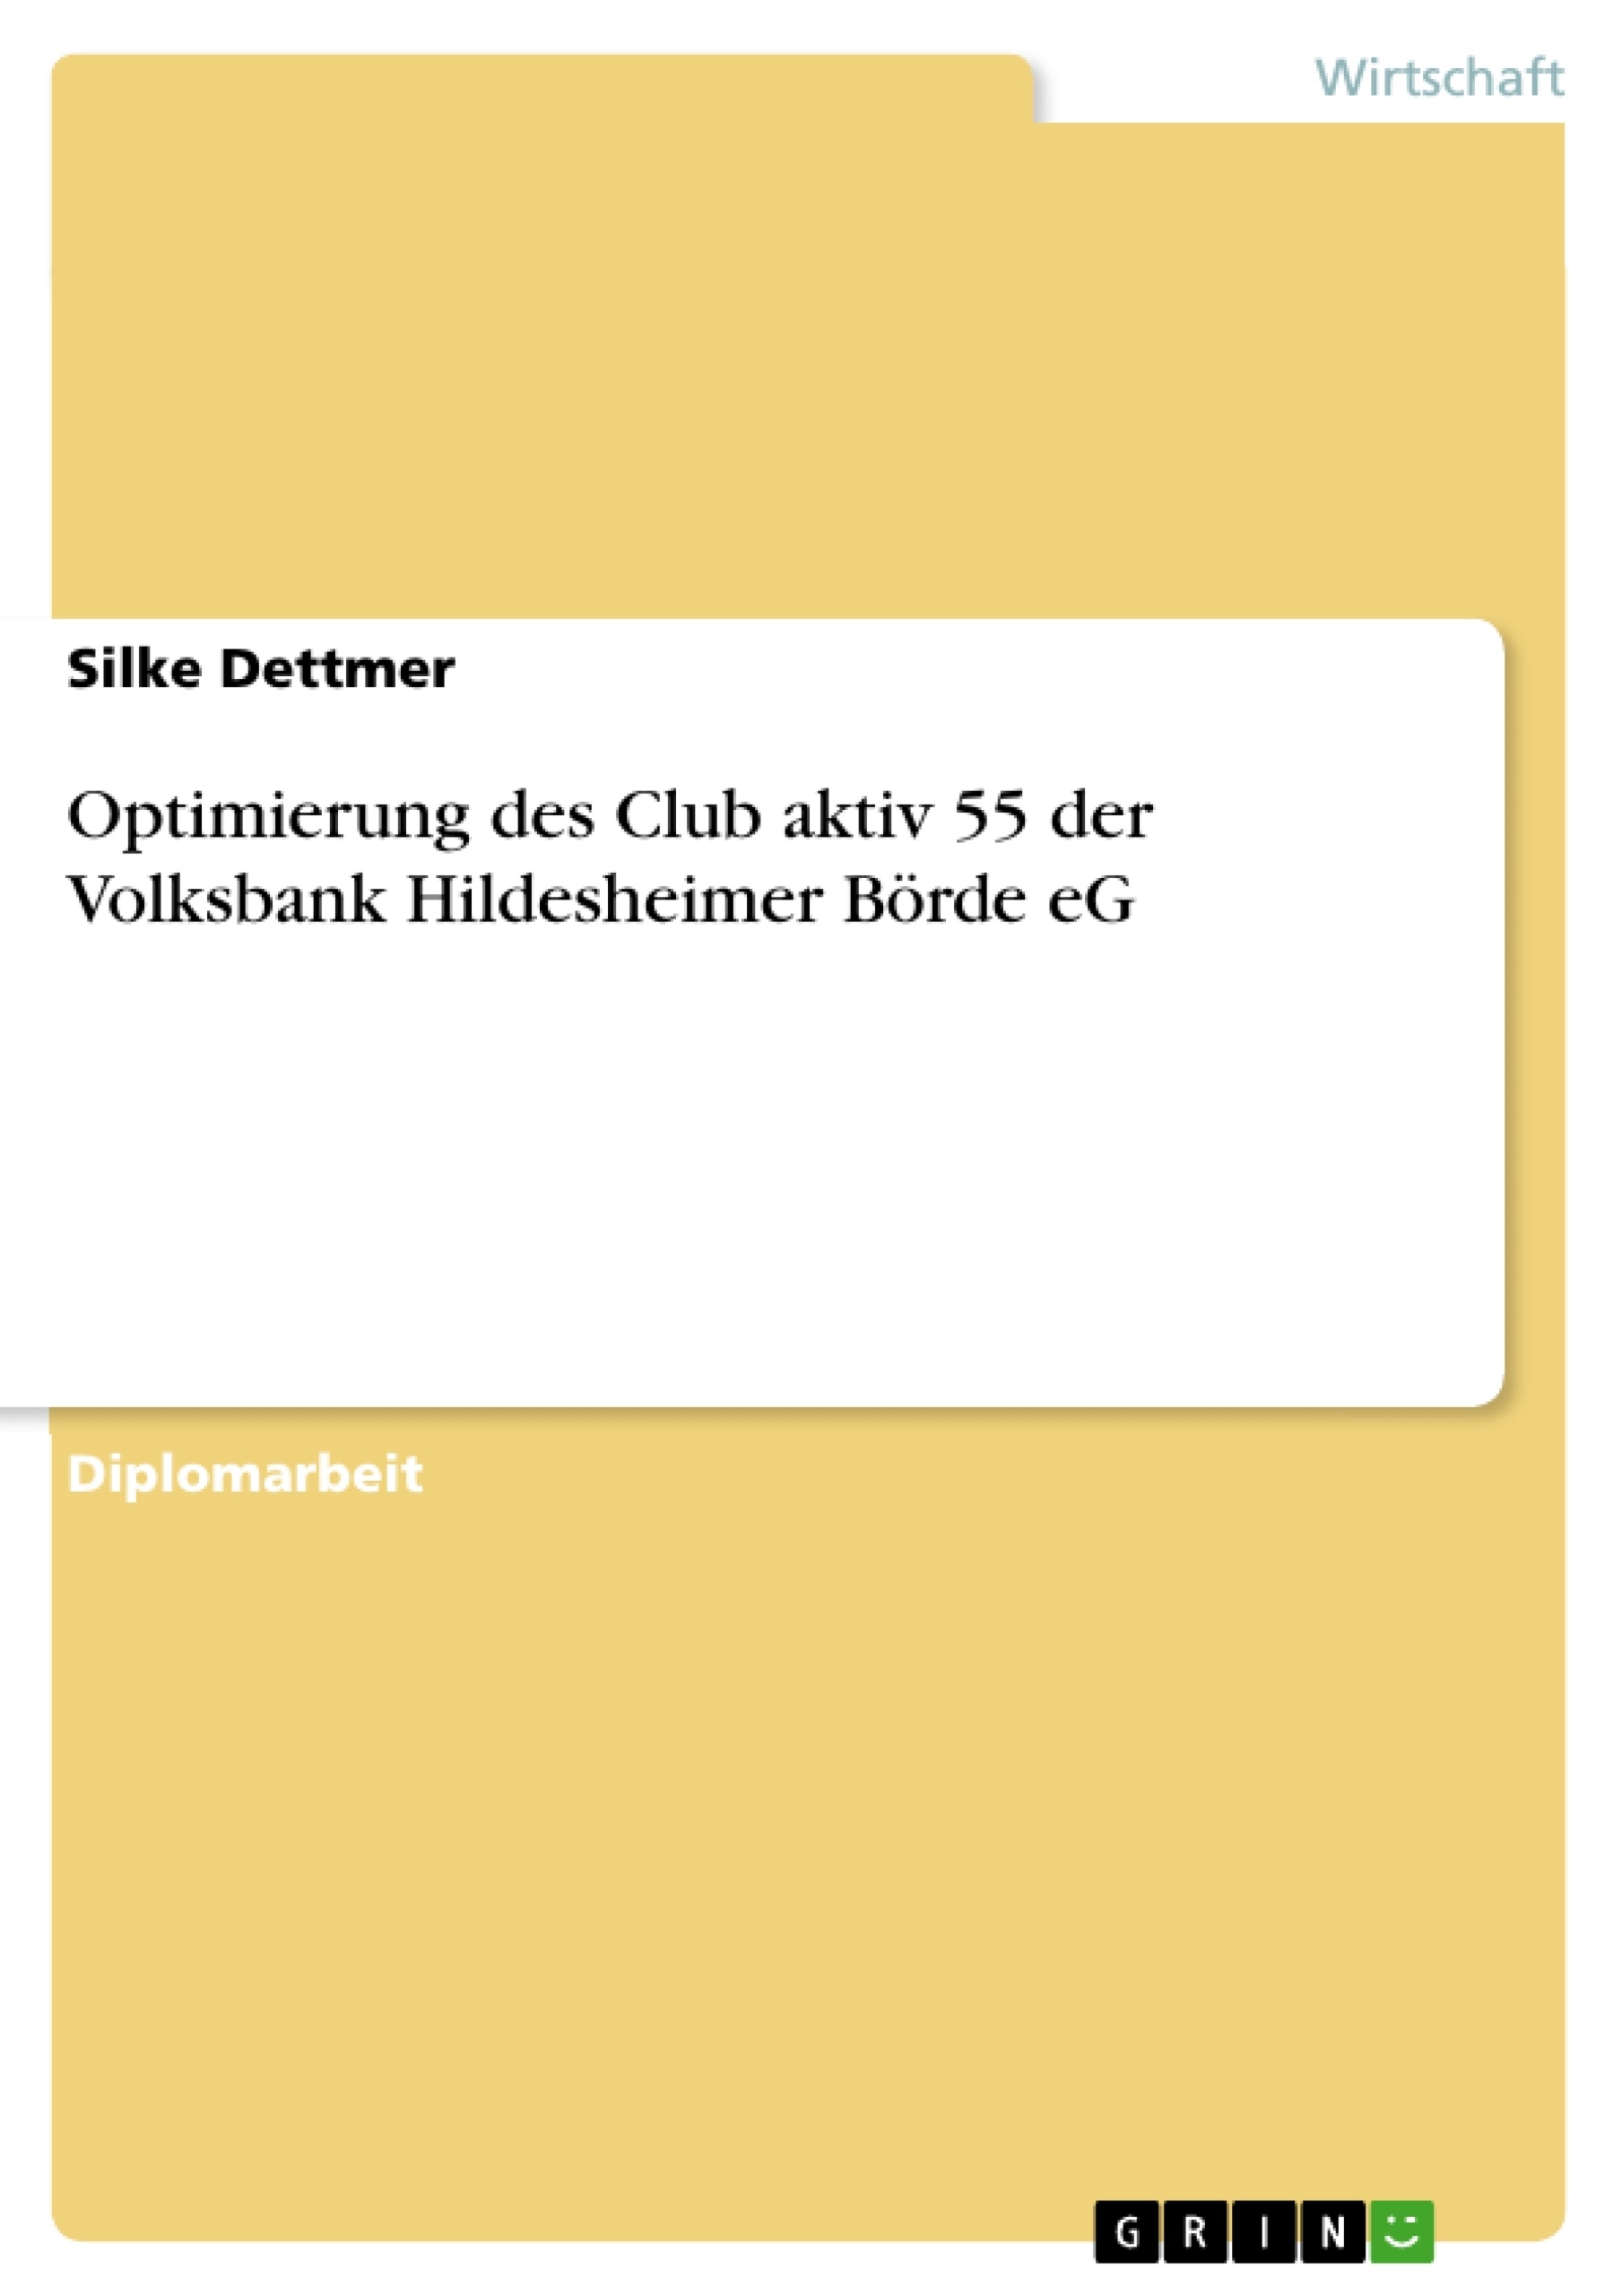 Título: Optimierung des Club aktiv 55 der Volksbank Hildesheimer Börde eG